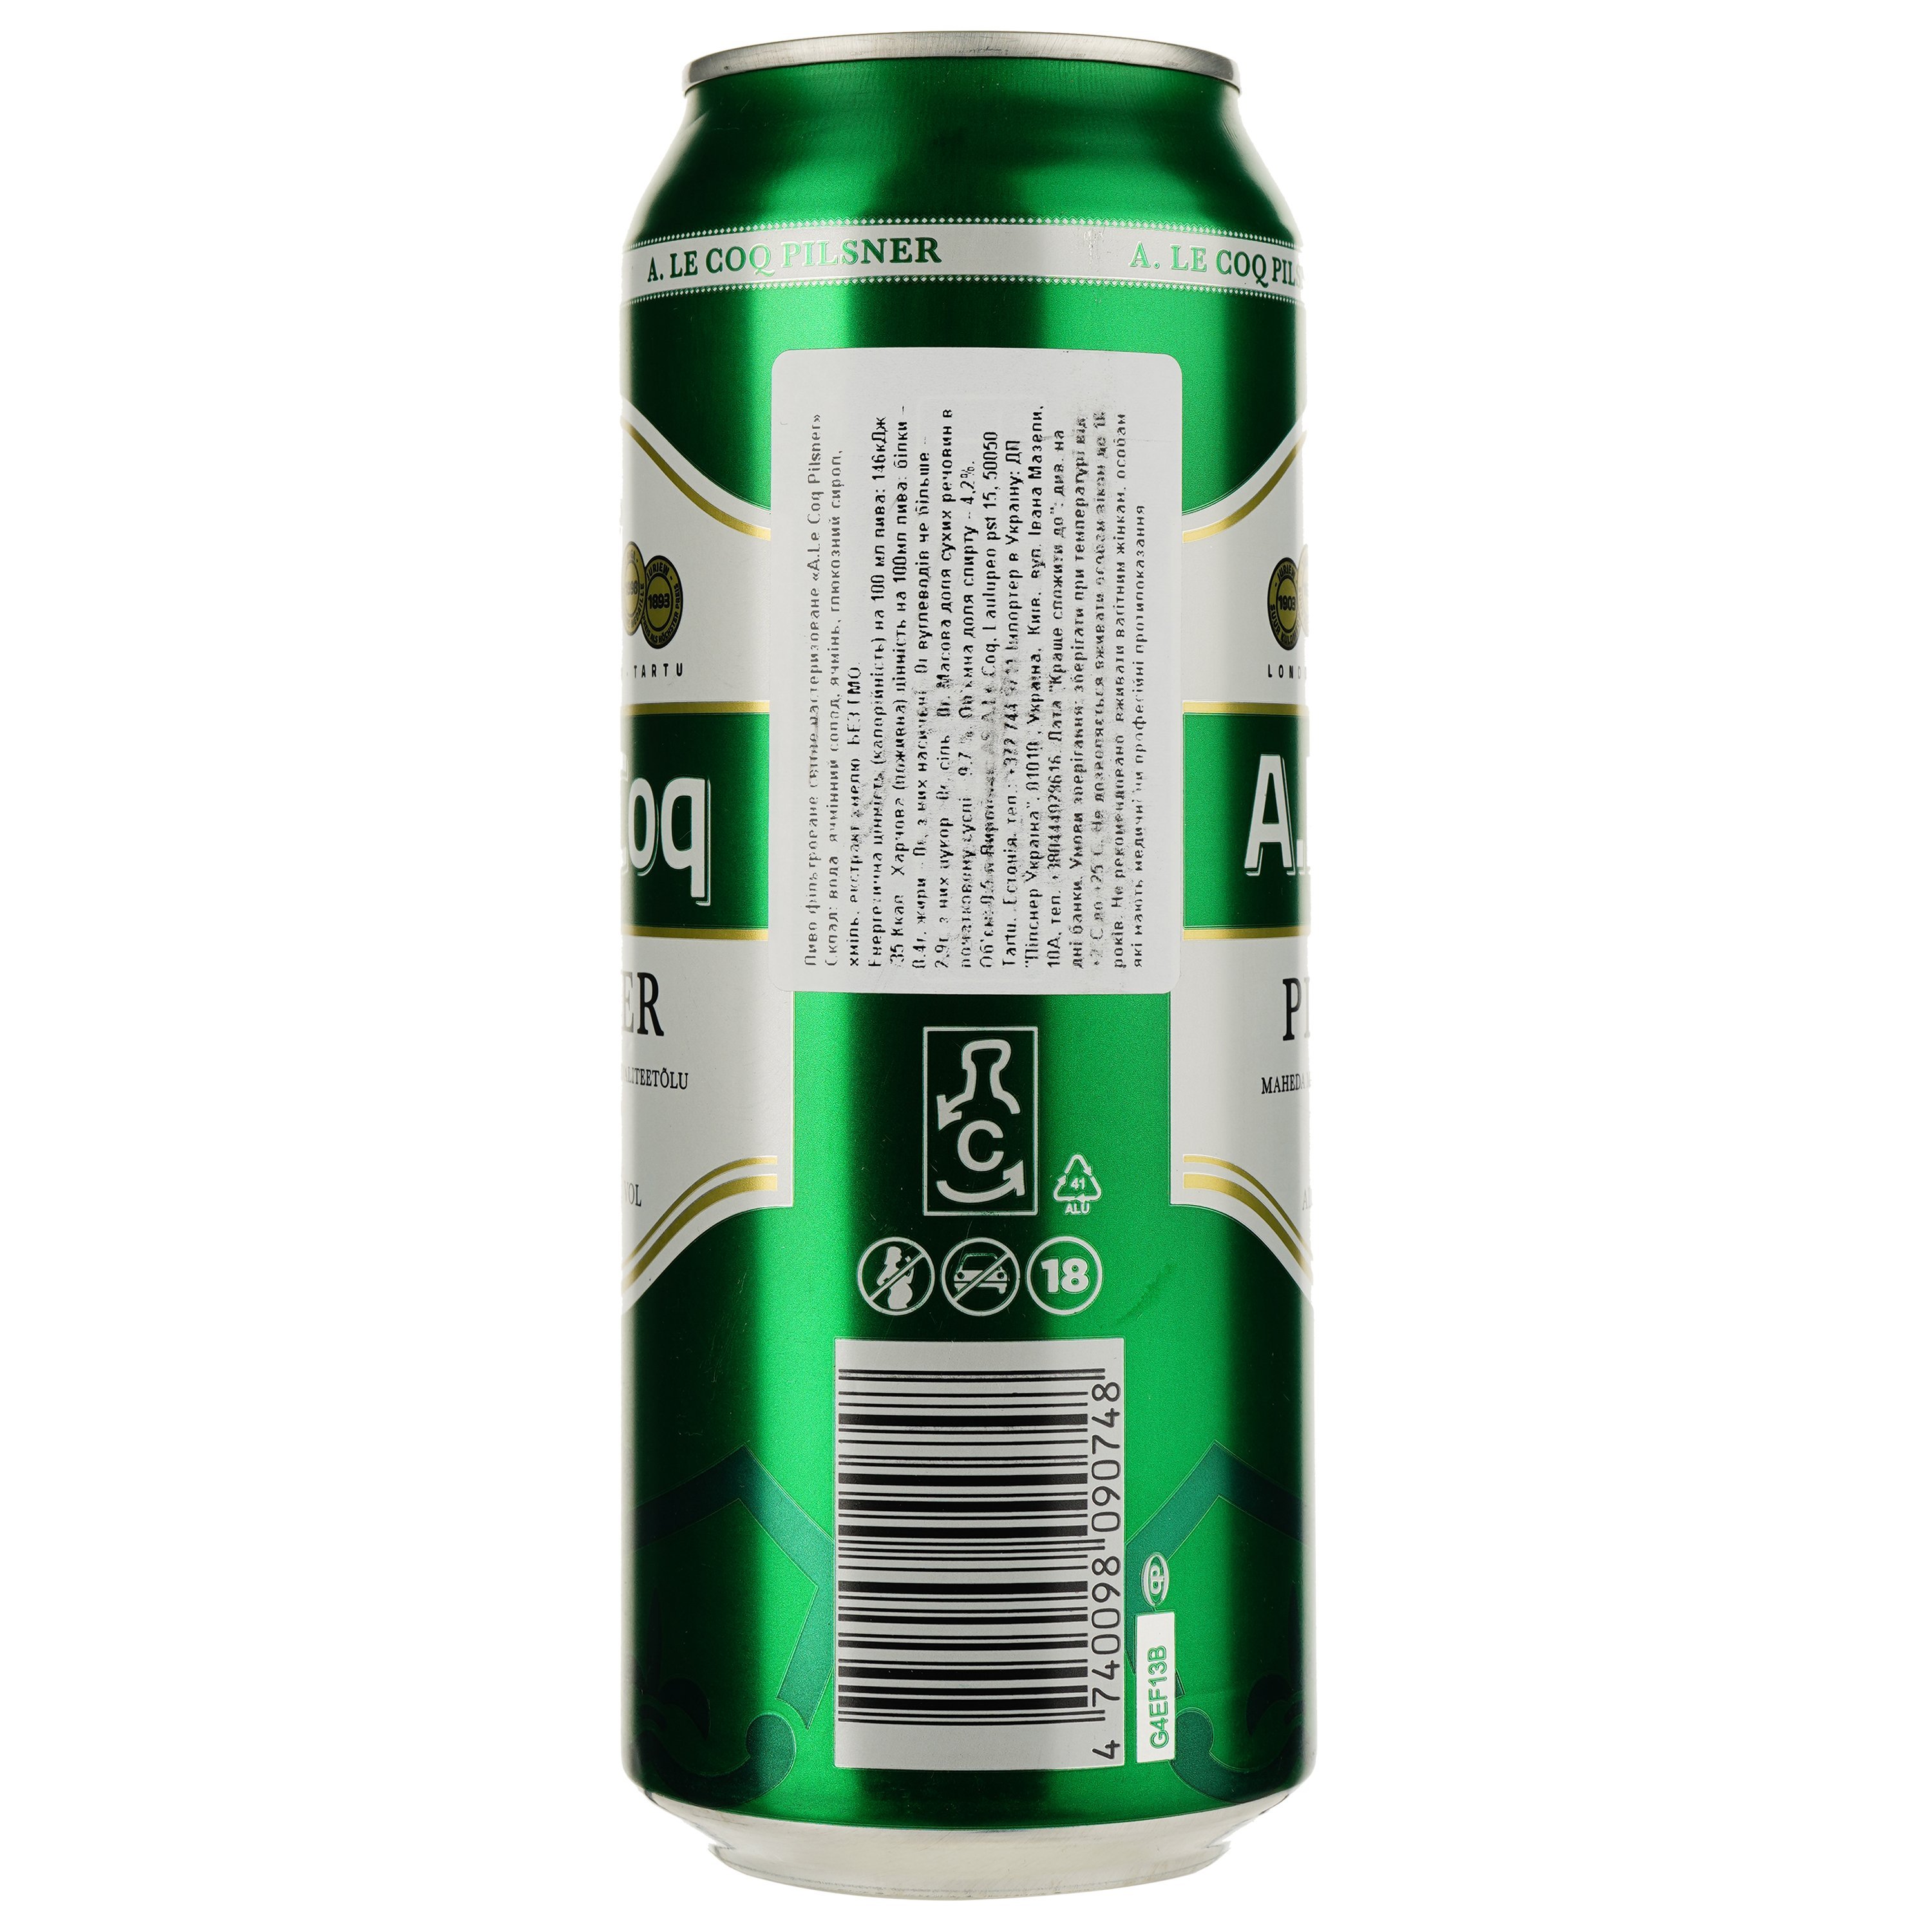 Пиво A Coq Pilsner светлое, 4.2%, ж/б, 0.5 л - фото 2